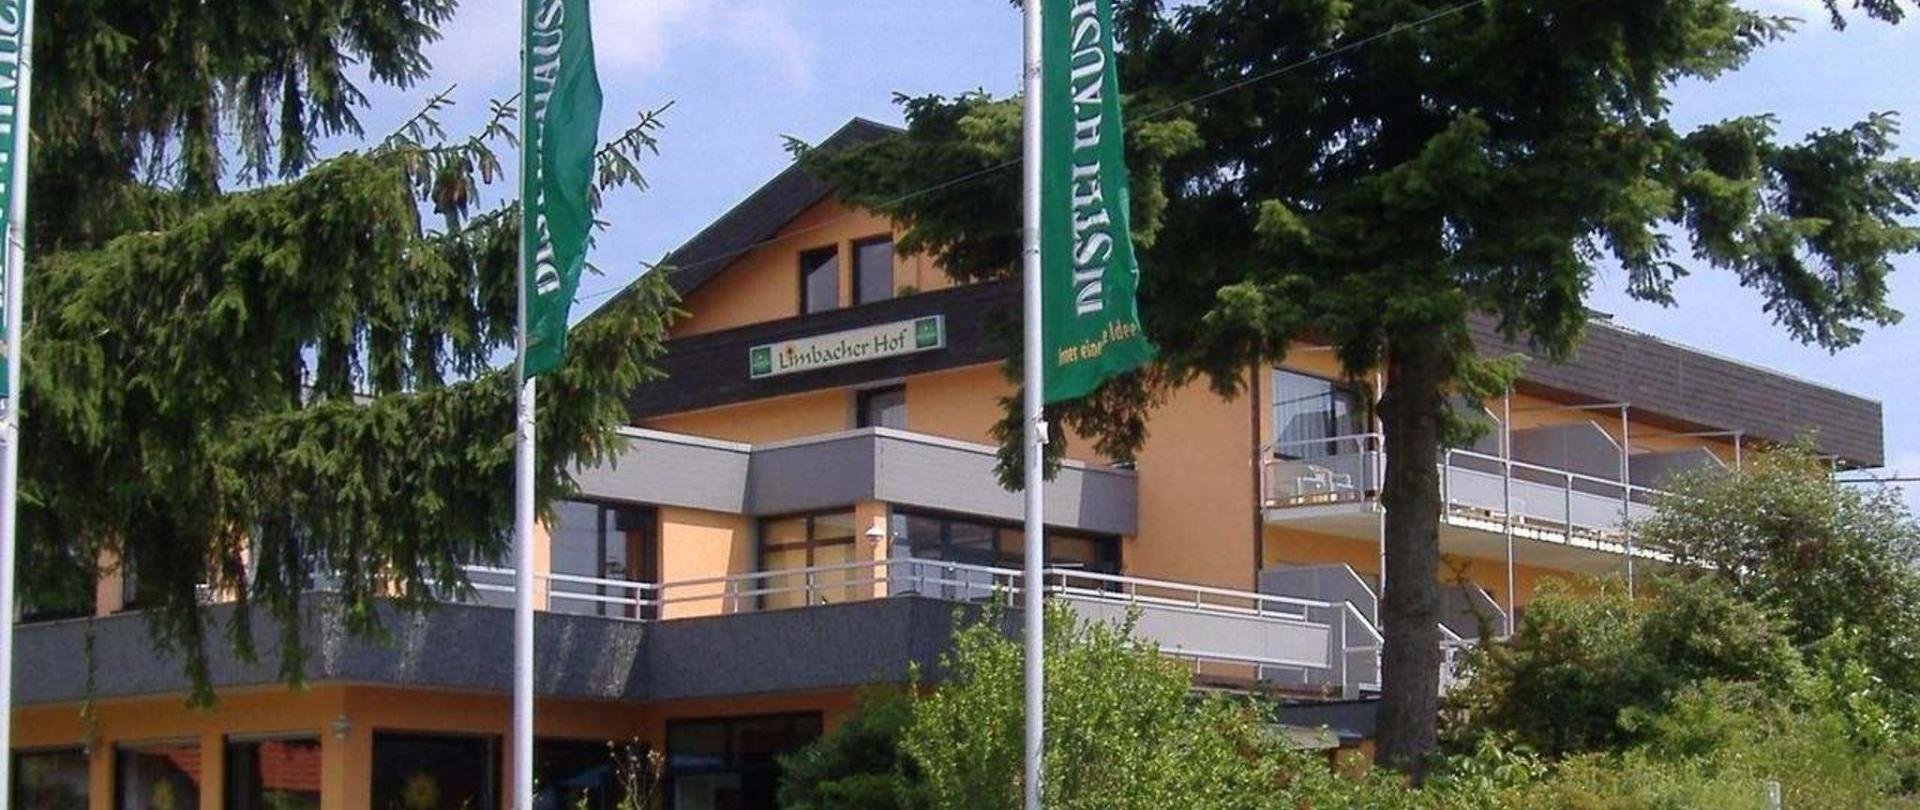 4 Tage Aktivtage im Odenwald inkl. Lunchpaket und Vitaldrink – Hotel Limbacher Hof , Baden-Württemberg inkl. Frühstück